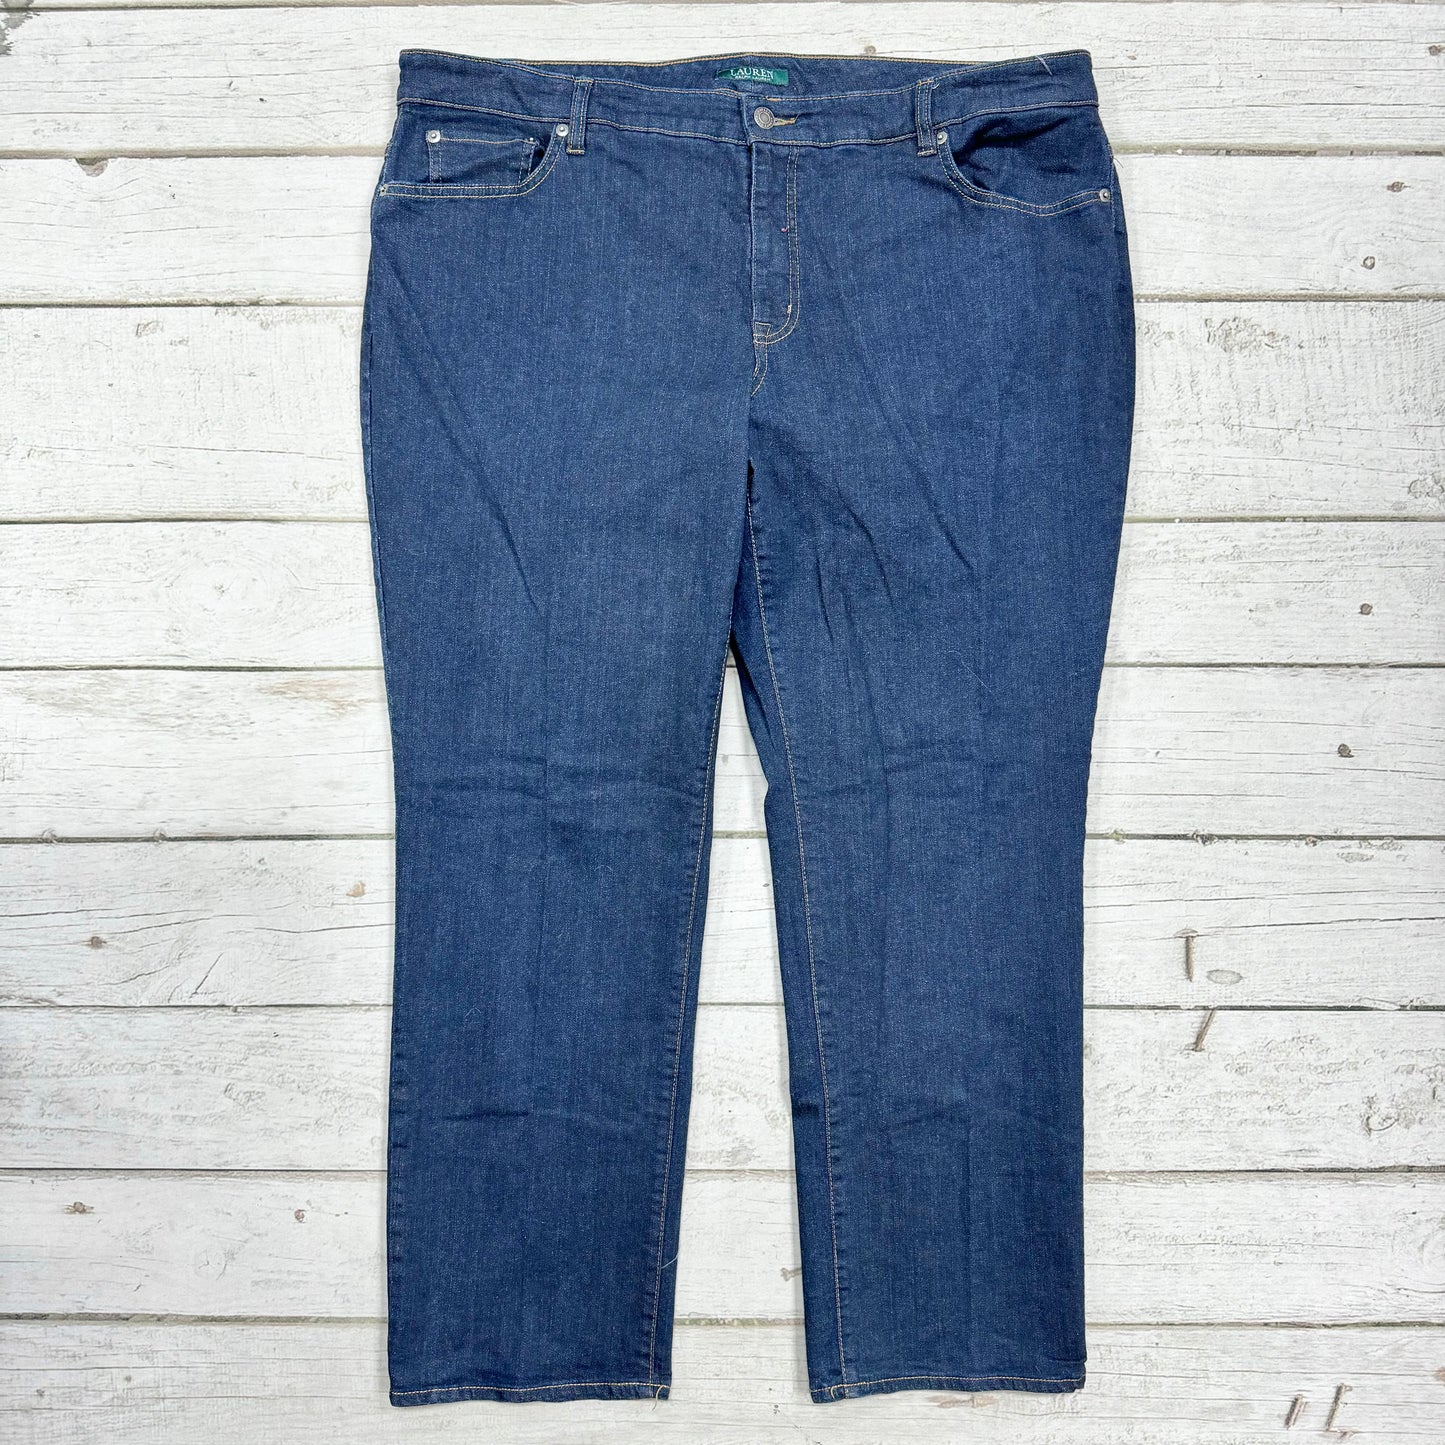 Jeans Straight By Lauren By Ralph Lauren  Size: 22w